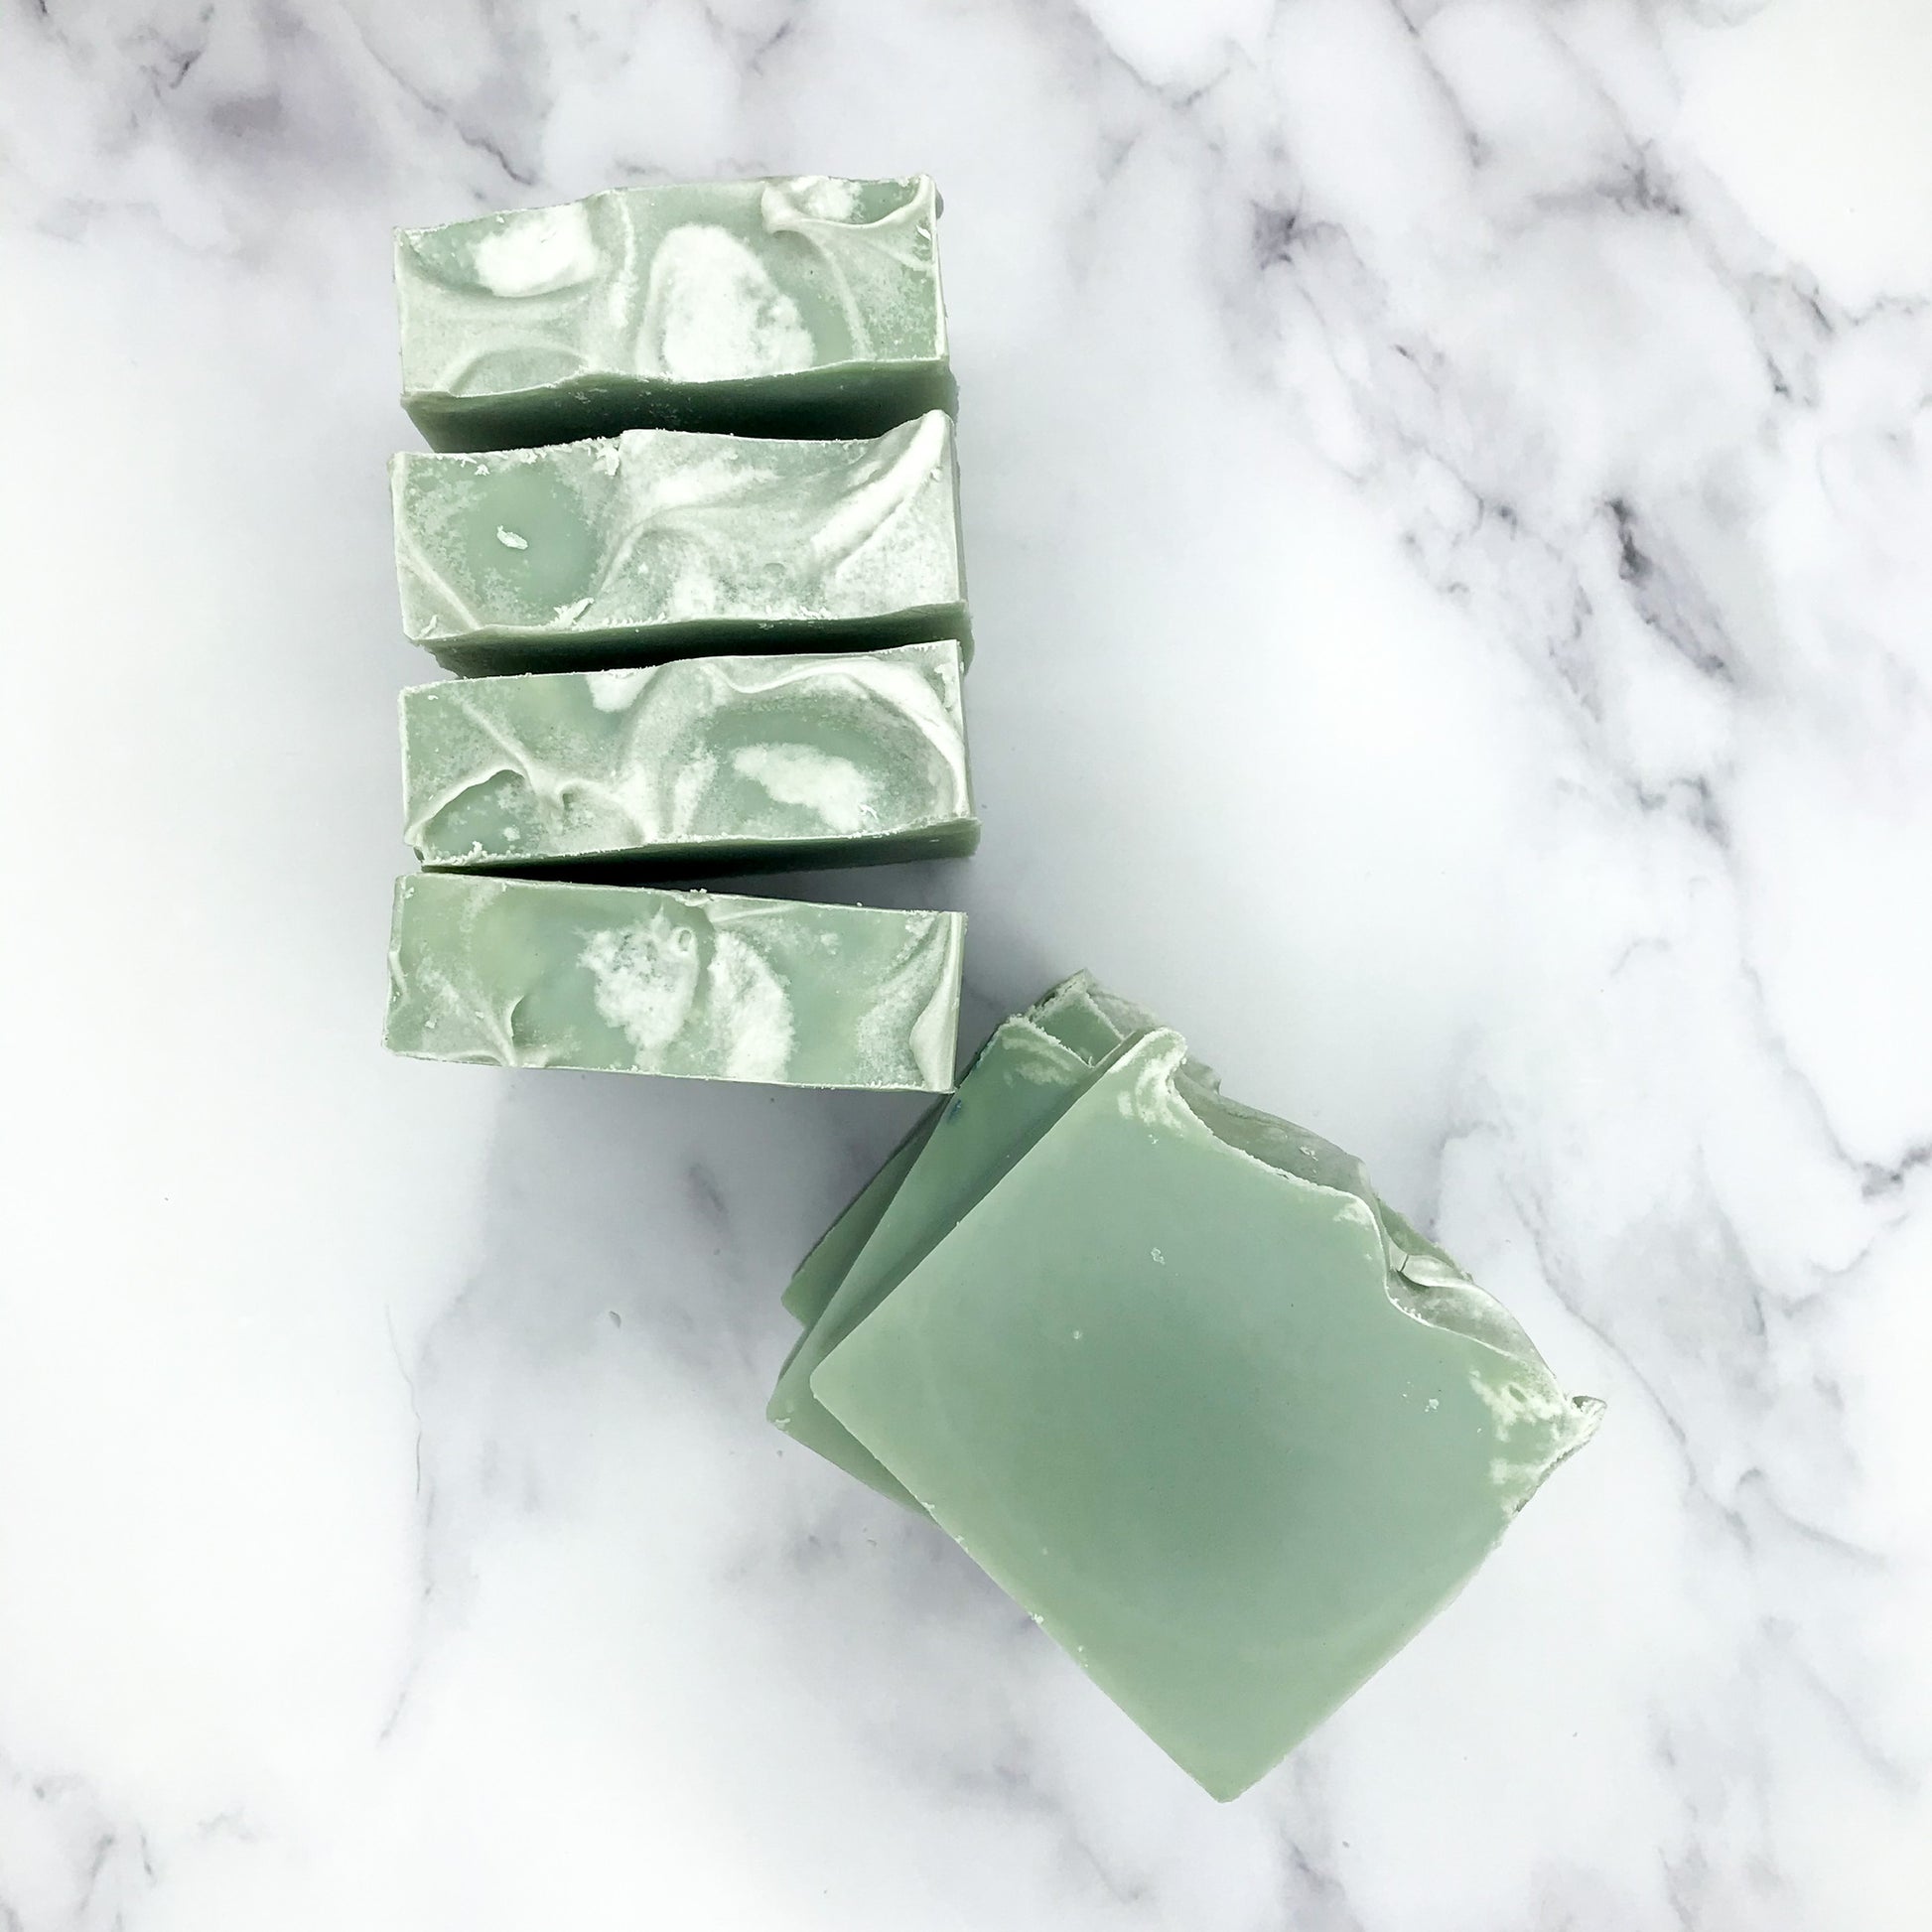 Indigo Soap Recipe for Natural Blue Soap • Lovely Greens